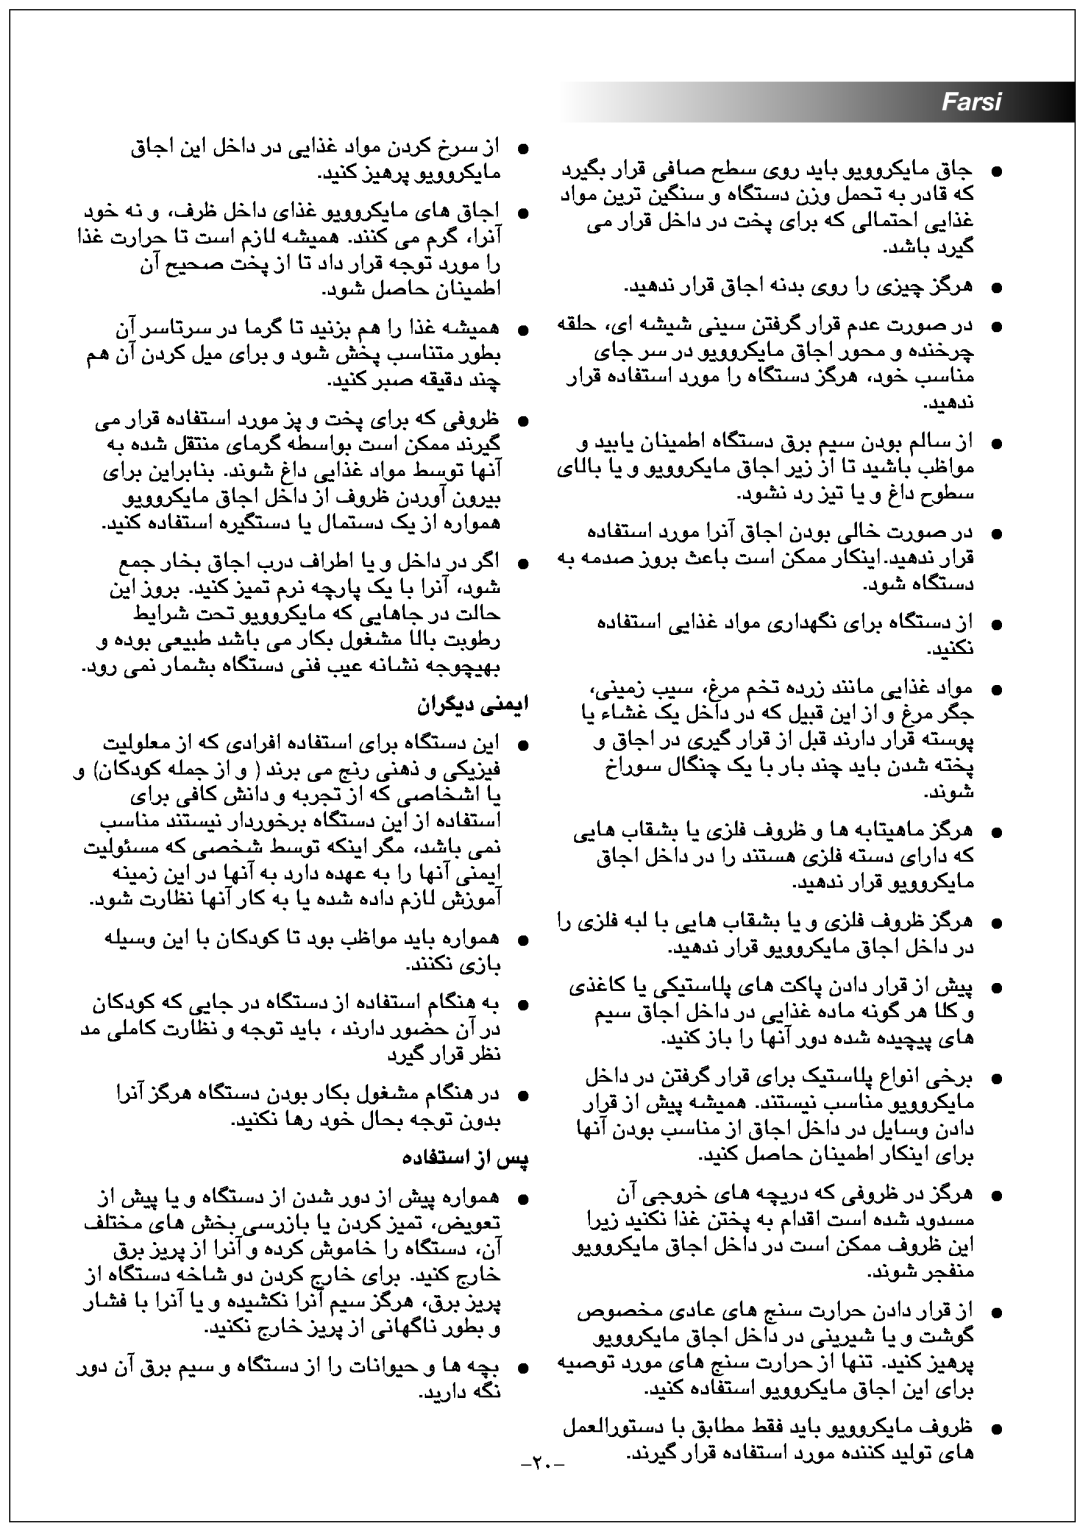 Black & Decker MZ2300P manual Farsi, ﻥﺍﺮﮕﯾﺩ ﯽﻨﻤﯾﺍ, ﻩﺩﺎﻔﺘﺳﺍ ﺯﺍ ﺲﭘ 